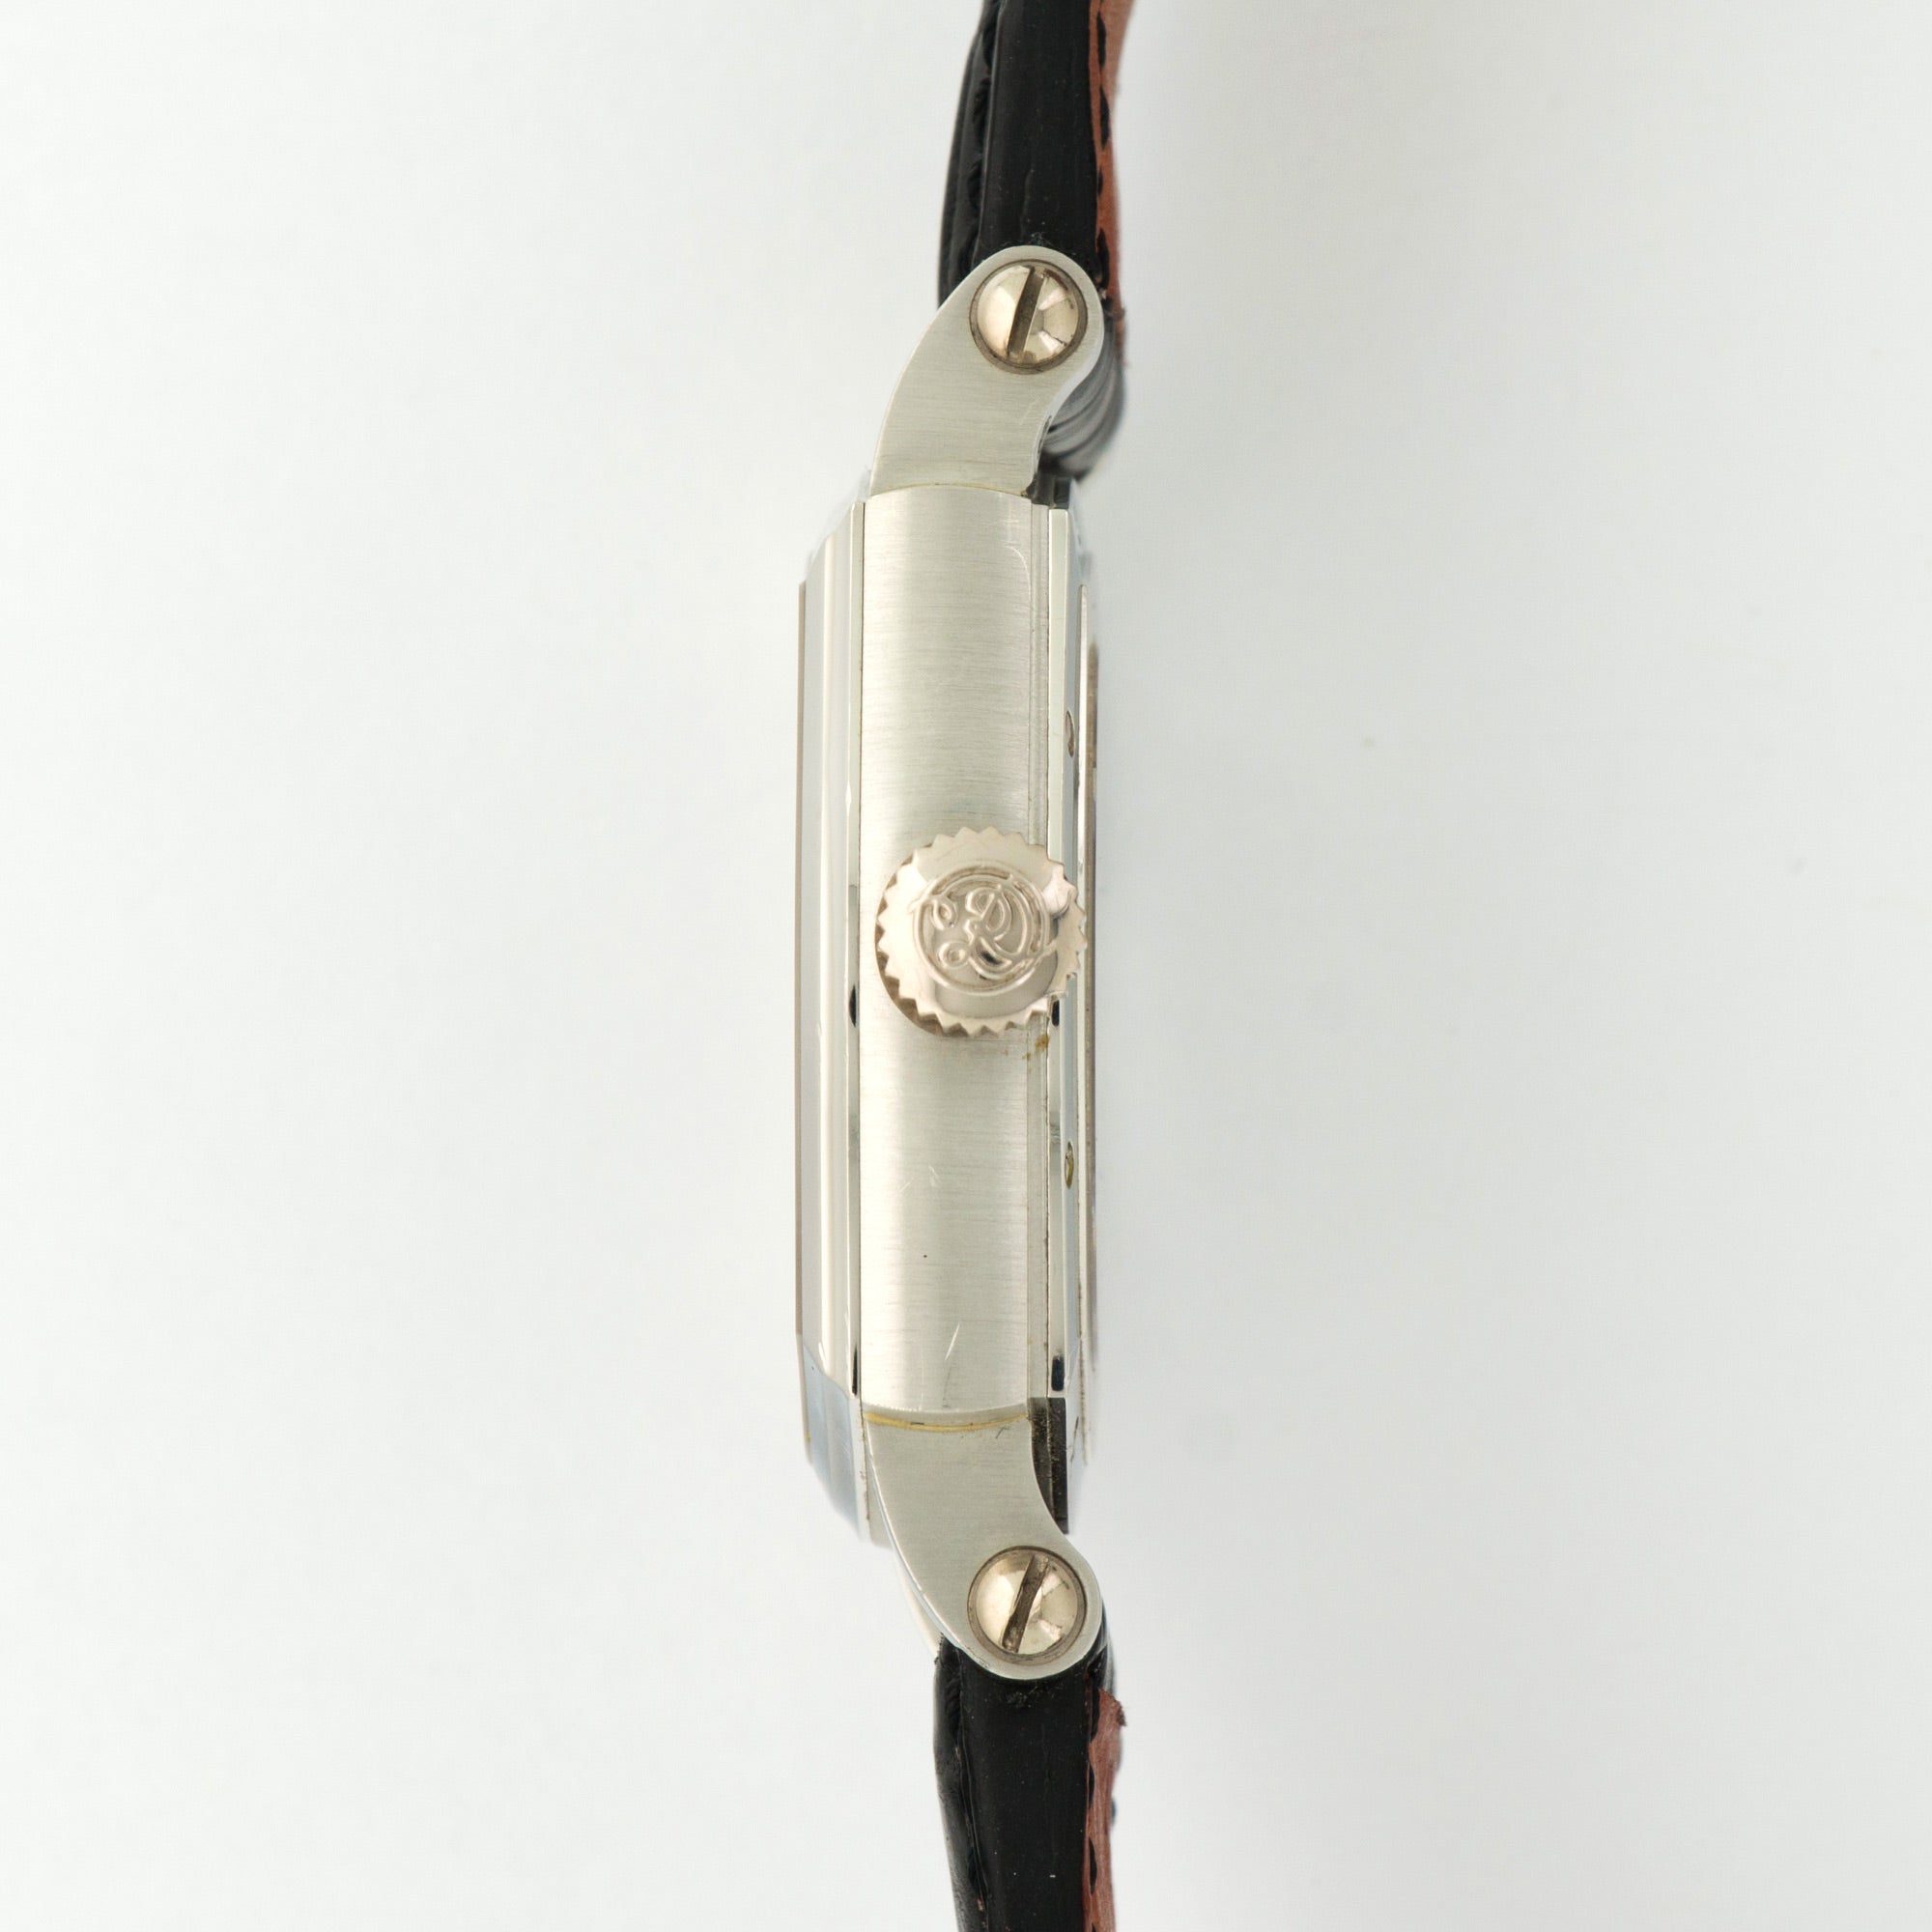 Roger Dubuis - Roger Dubuis Platinum Sympathy Perpetual Calendar Retrograde Watch - The Keystone Watches